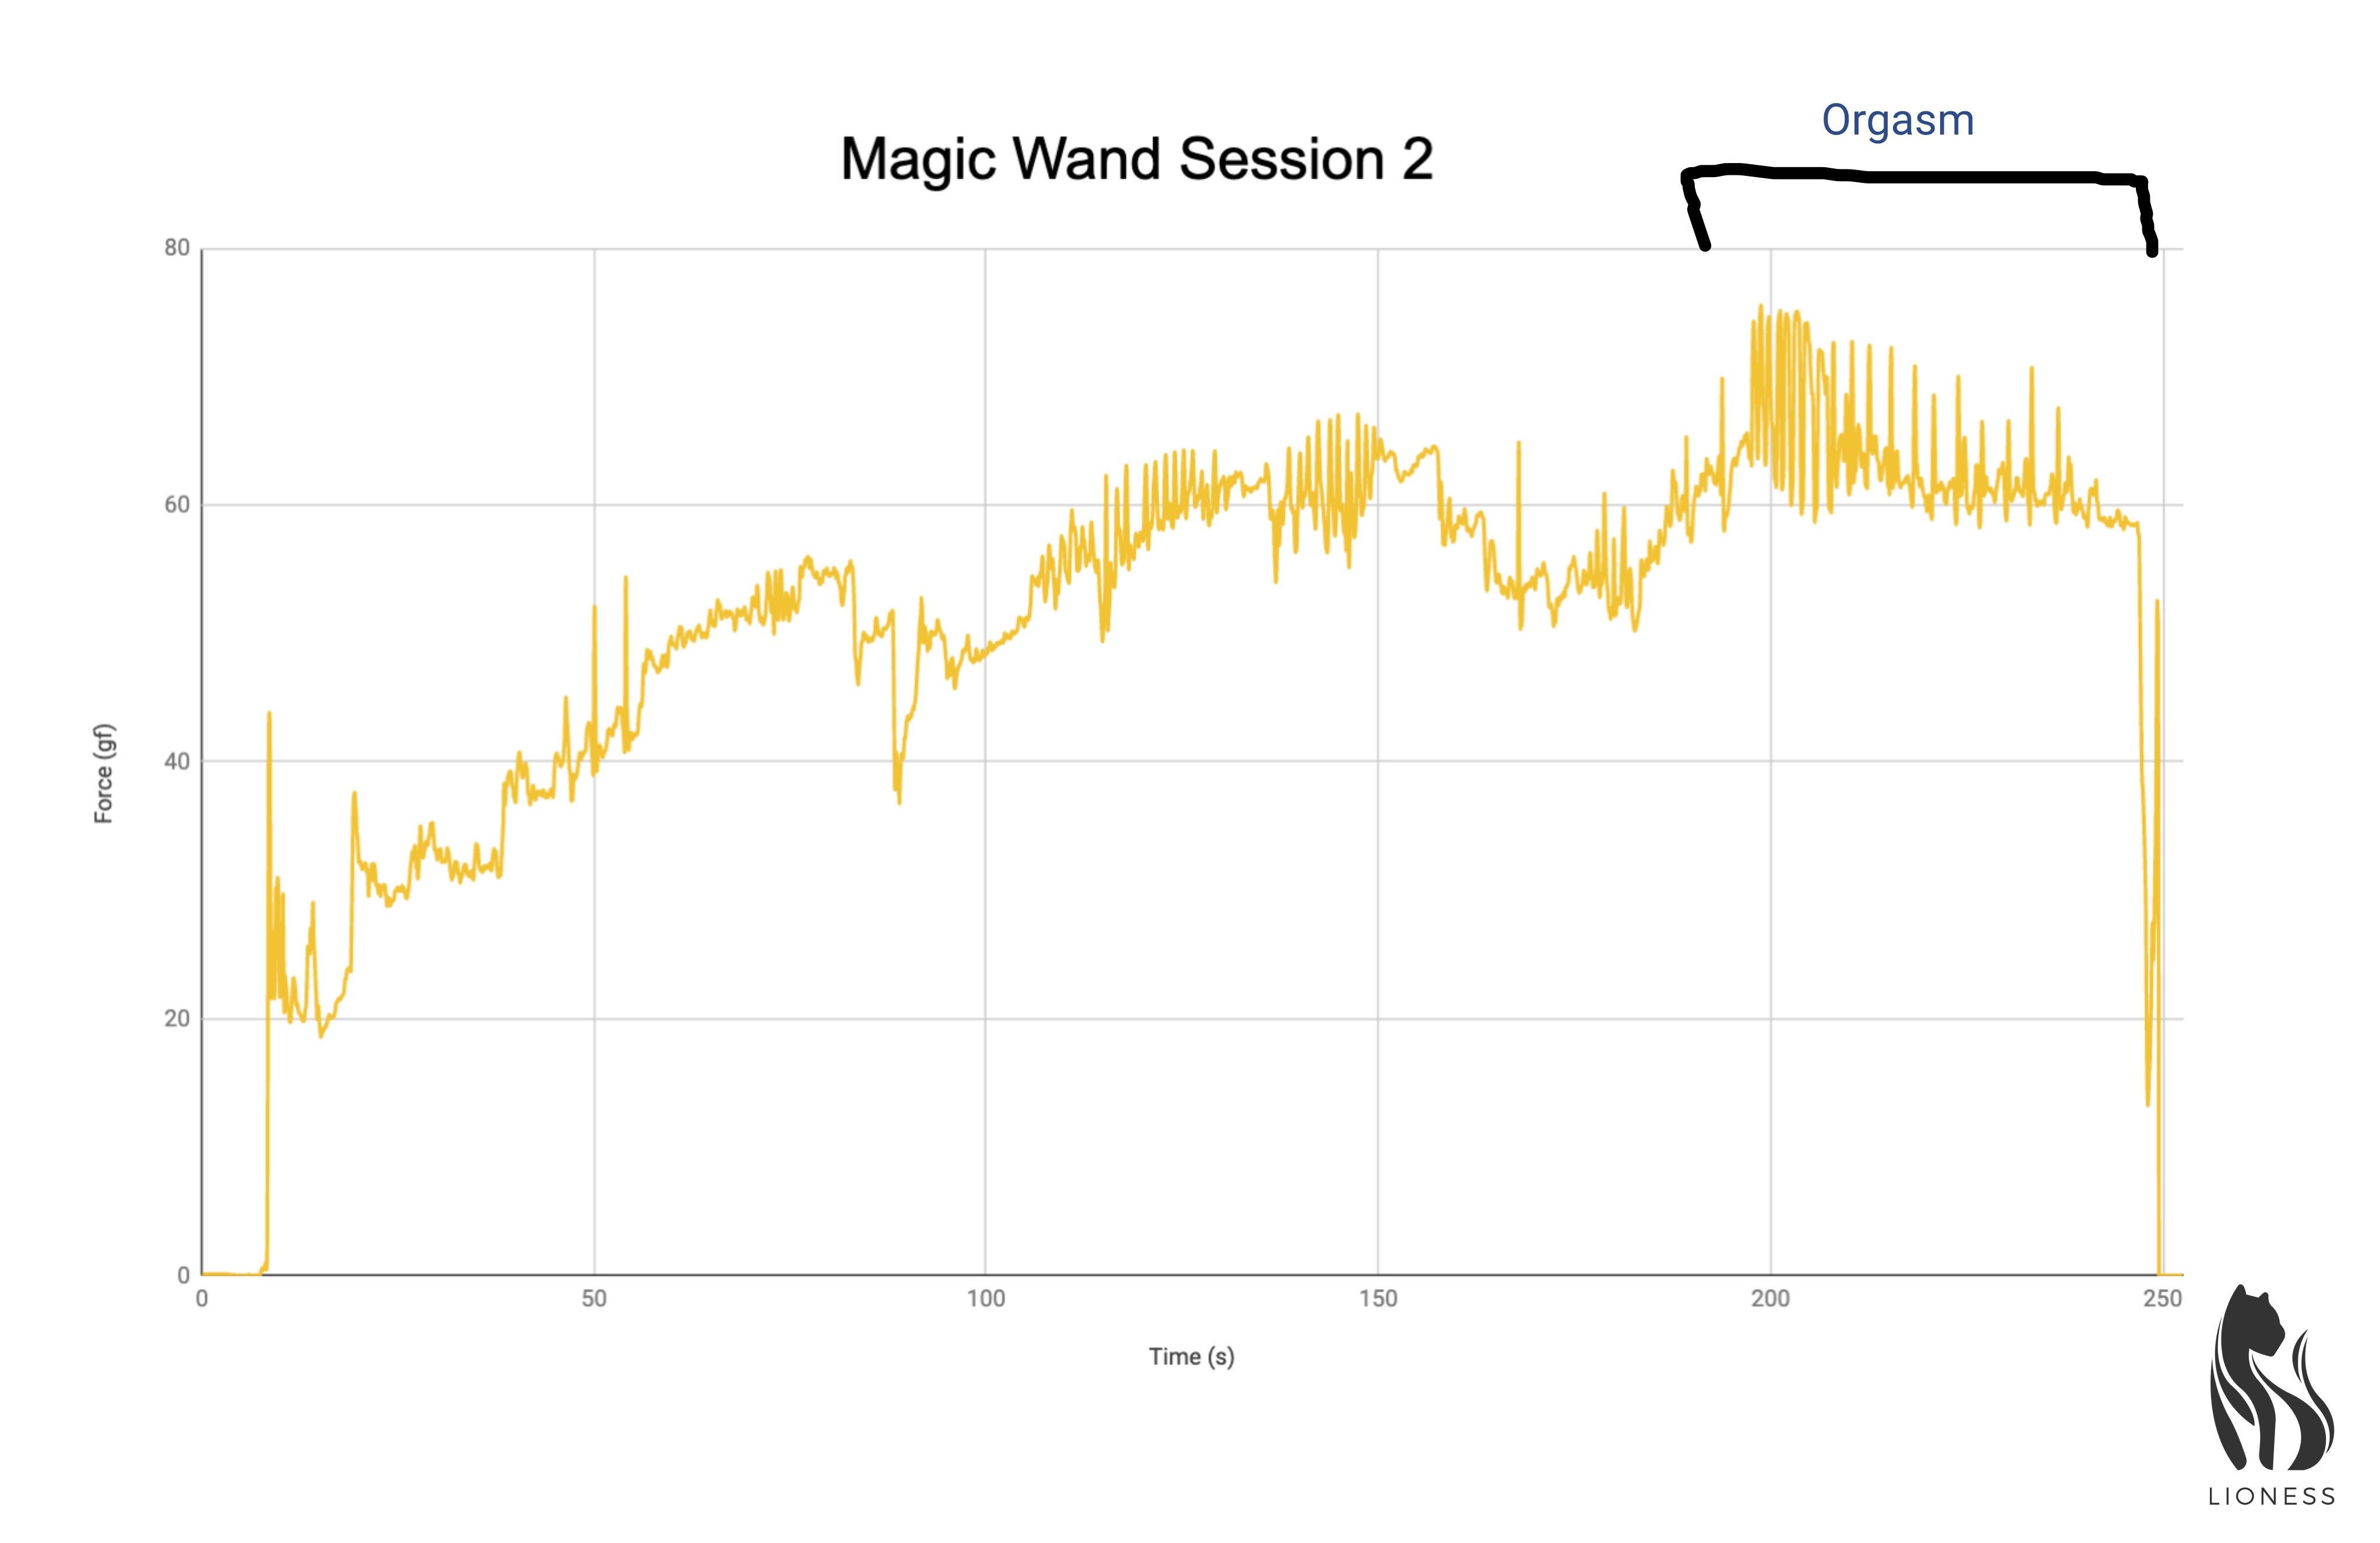 Magic wand session 2 data